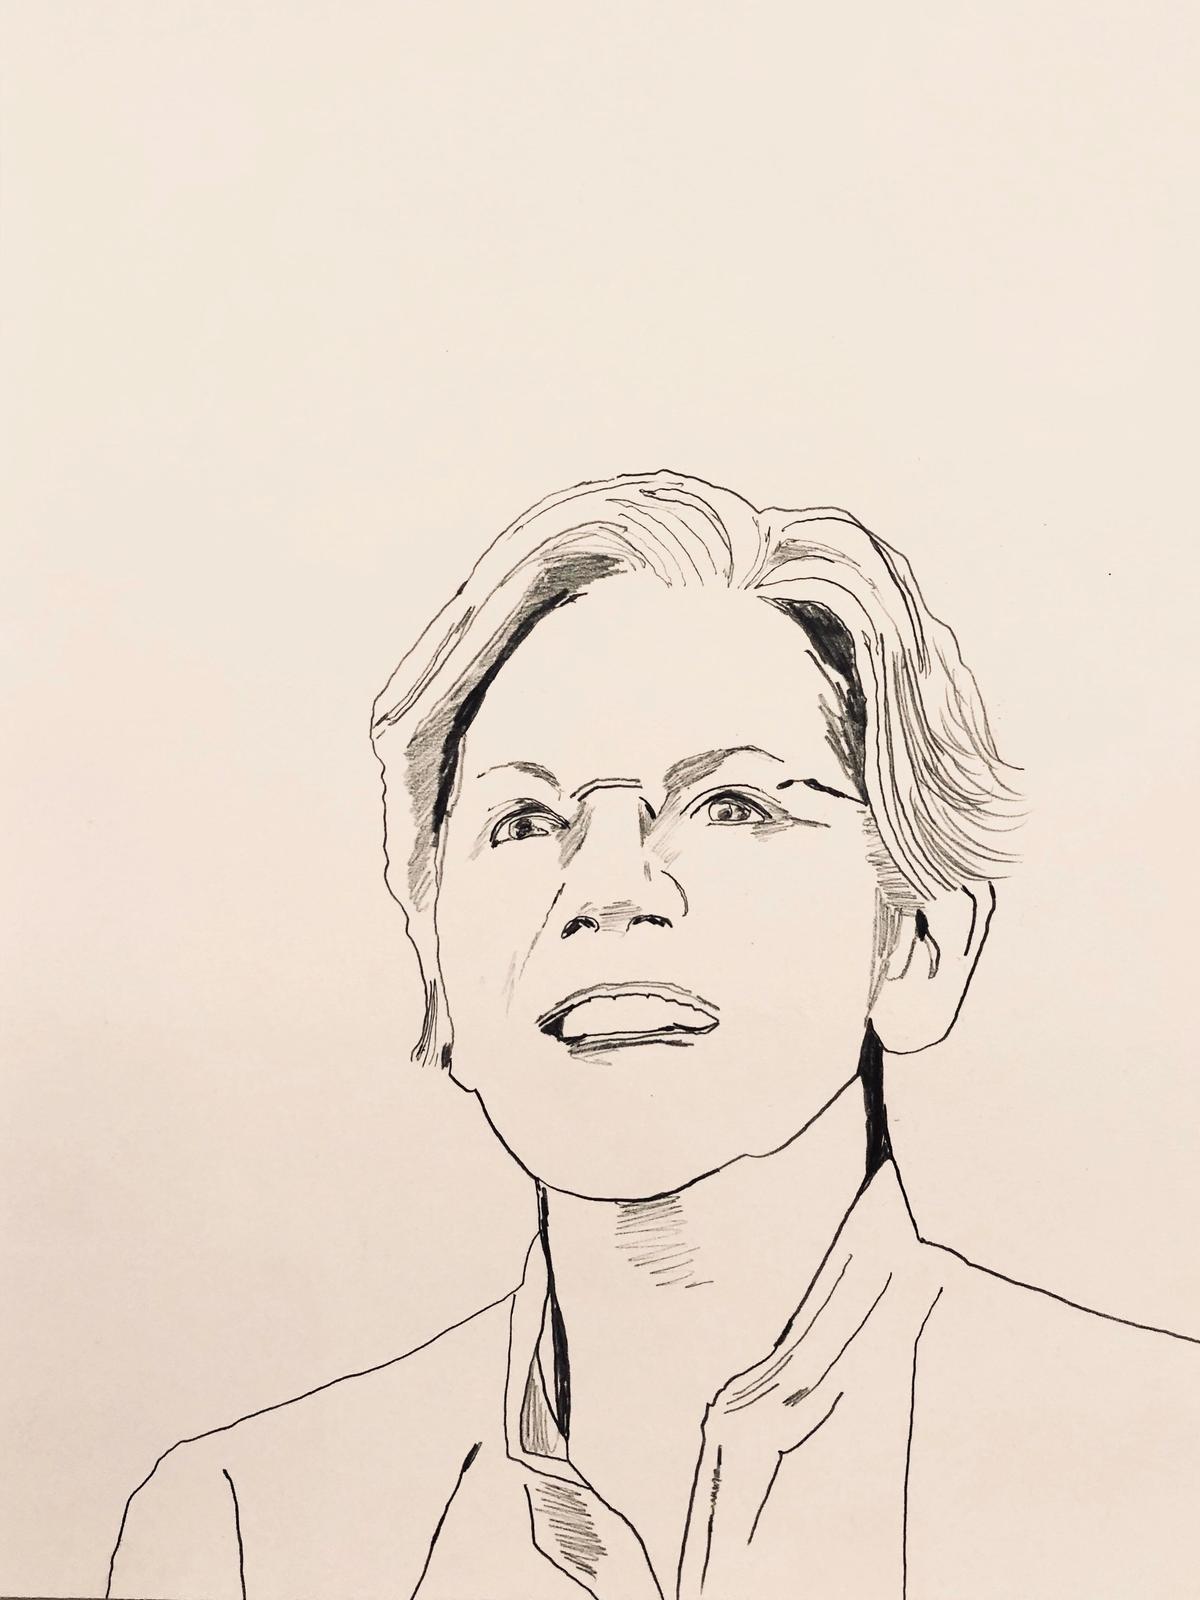 A portrait of the Massachusetts senator from the project "Elizabeth Warren Wins" by Whitney Bedford © Whitney Bedford